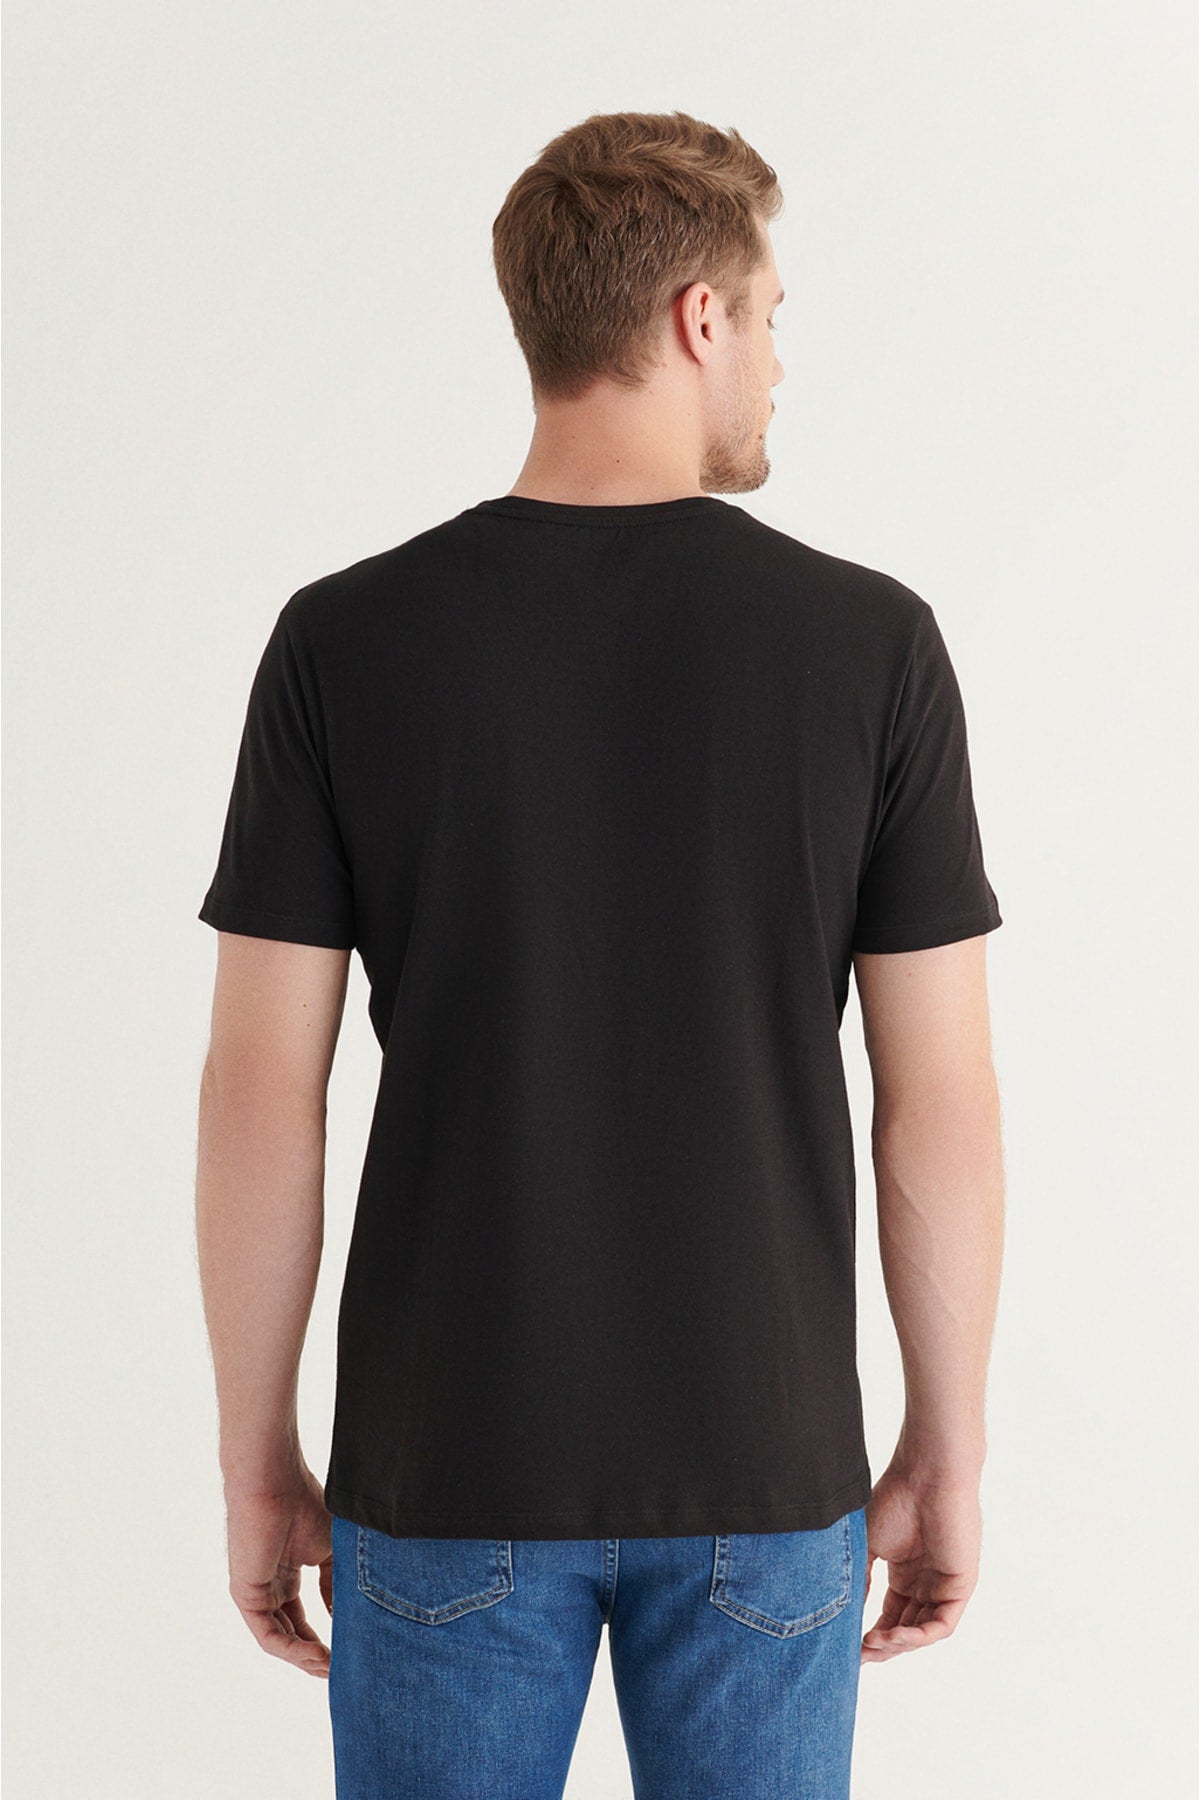 Men's Black 2 Piece Cycling 100 %Cotton Basic T-Shirt E001011